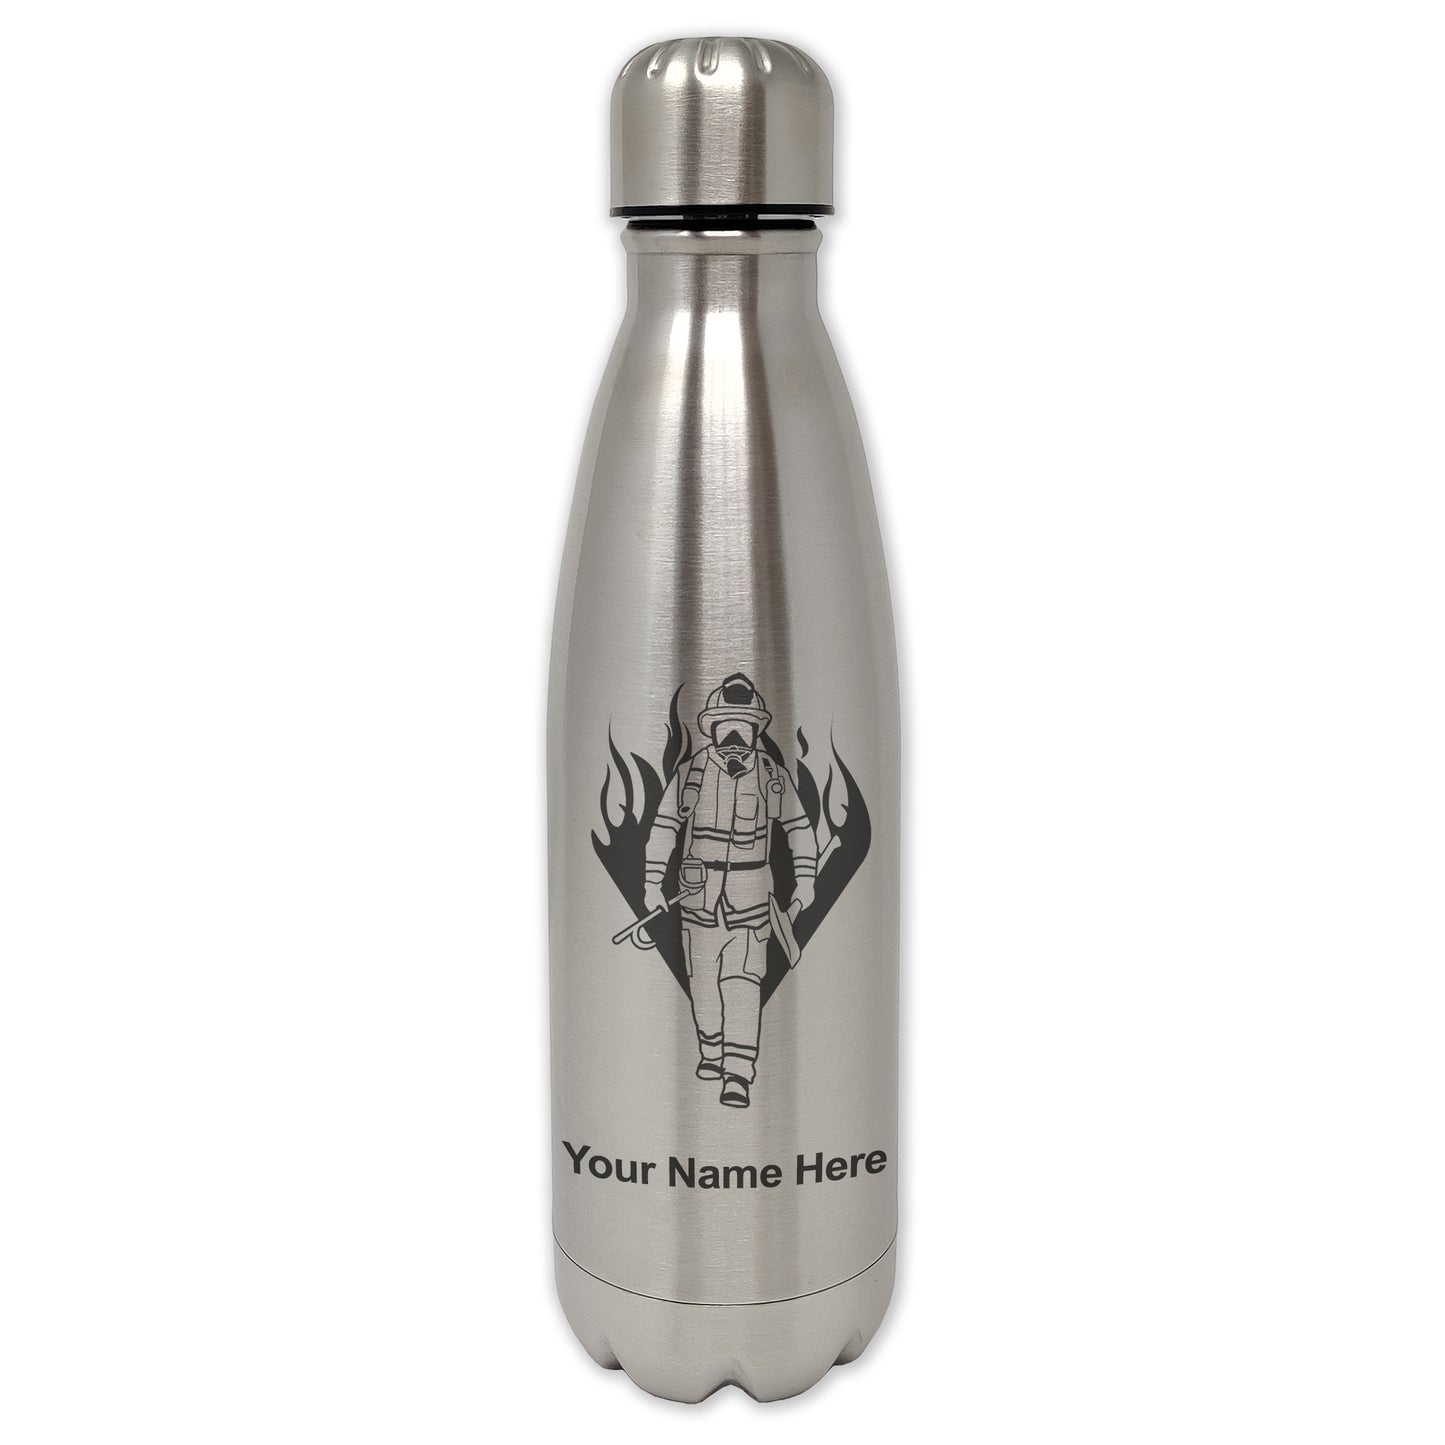 LaserGram Single Wall Water Bottle, Fireman, Personalized Engraving Included